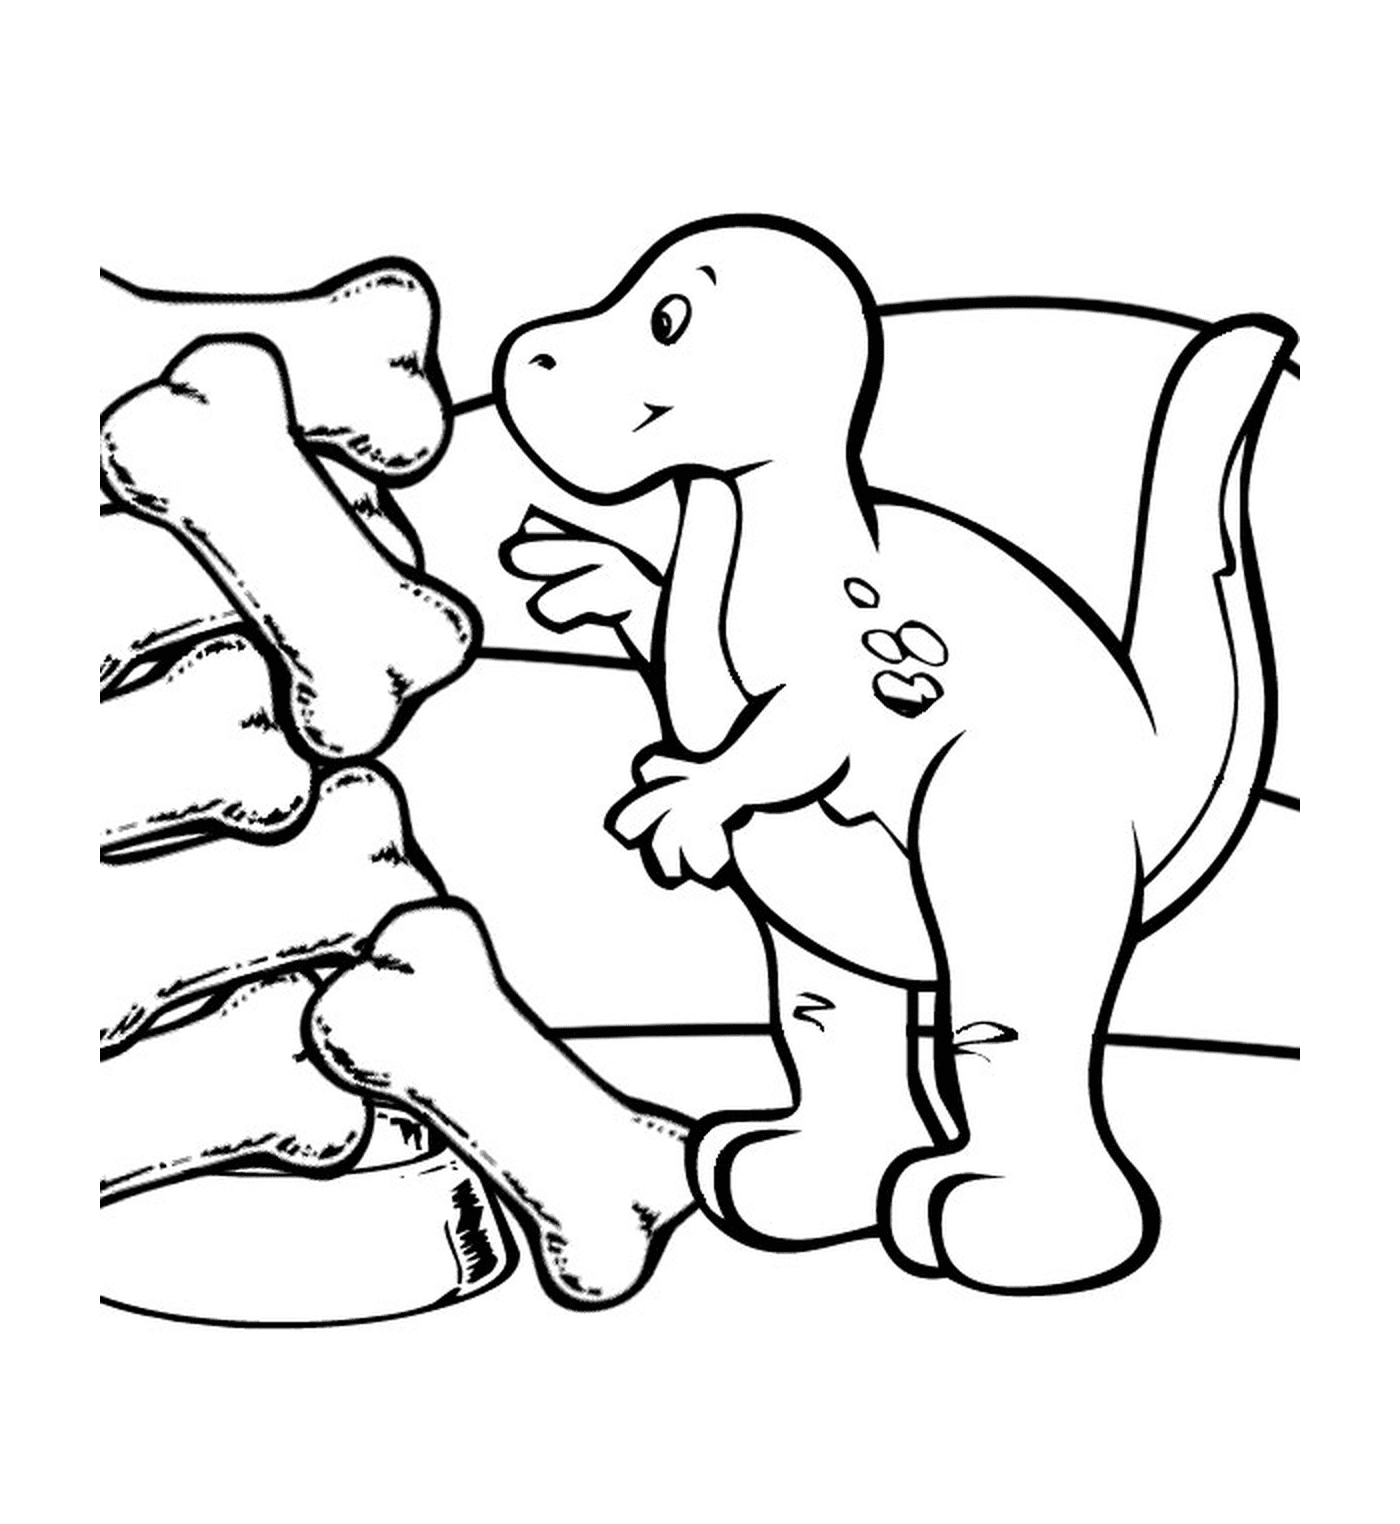  Dinosaur next to fossilized bones 